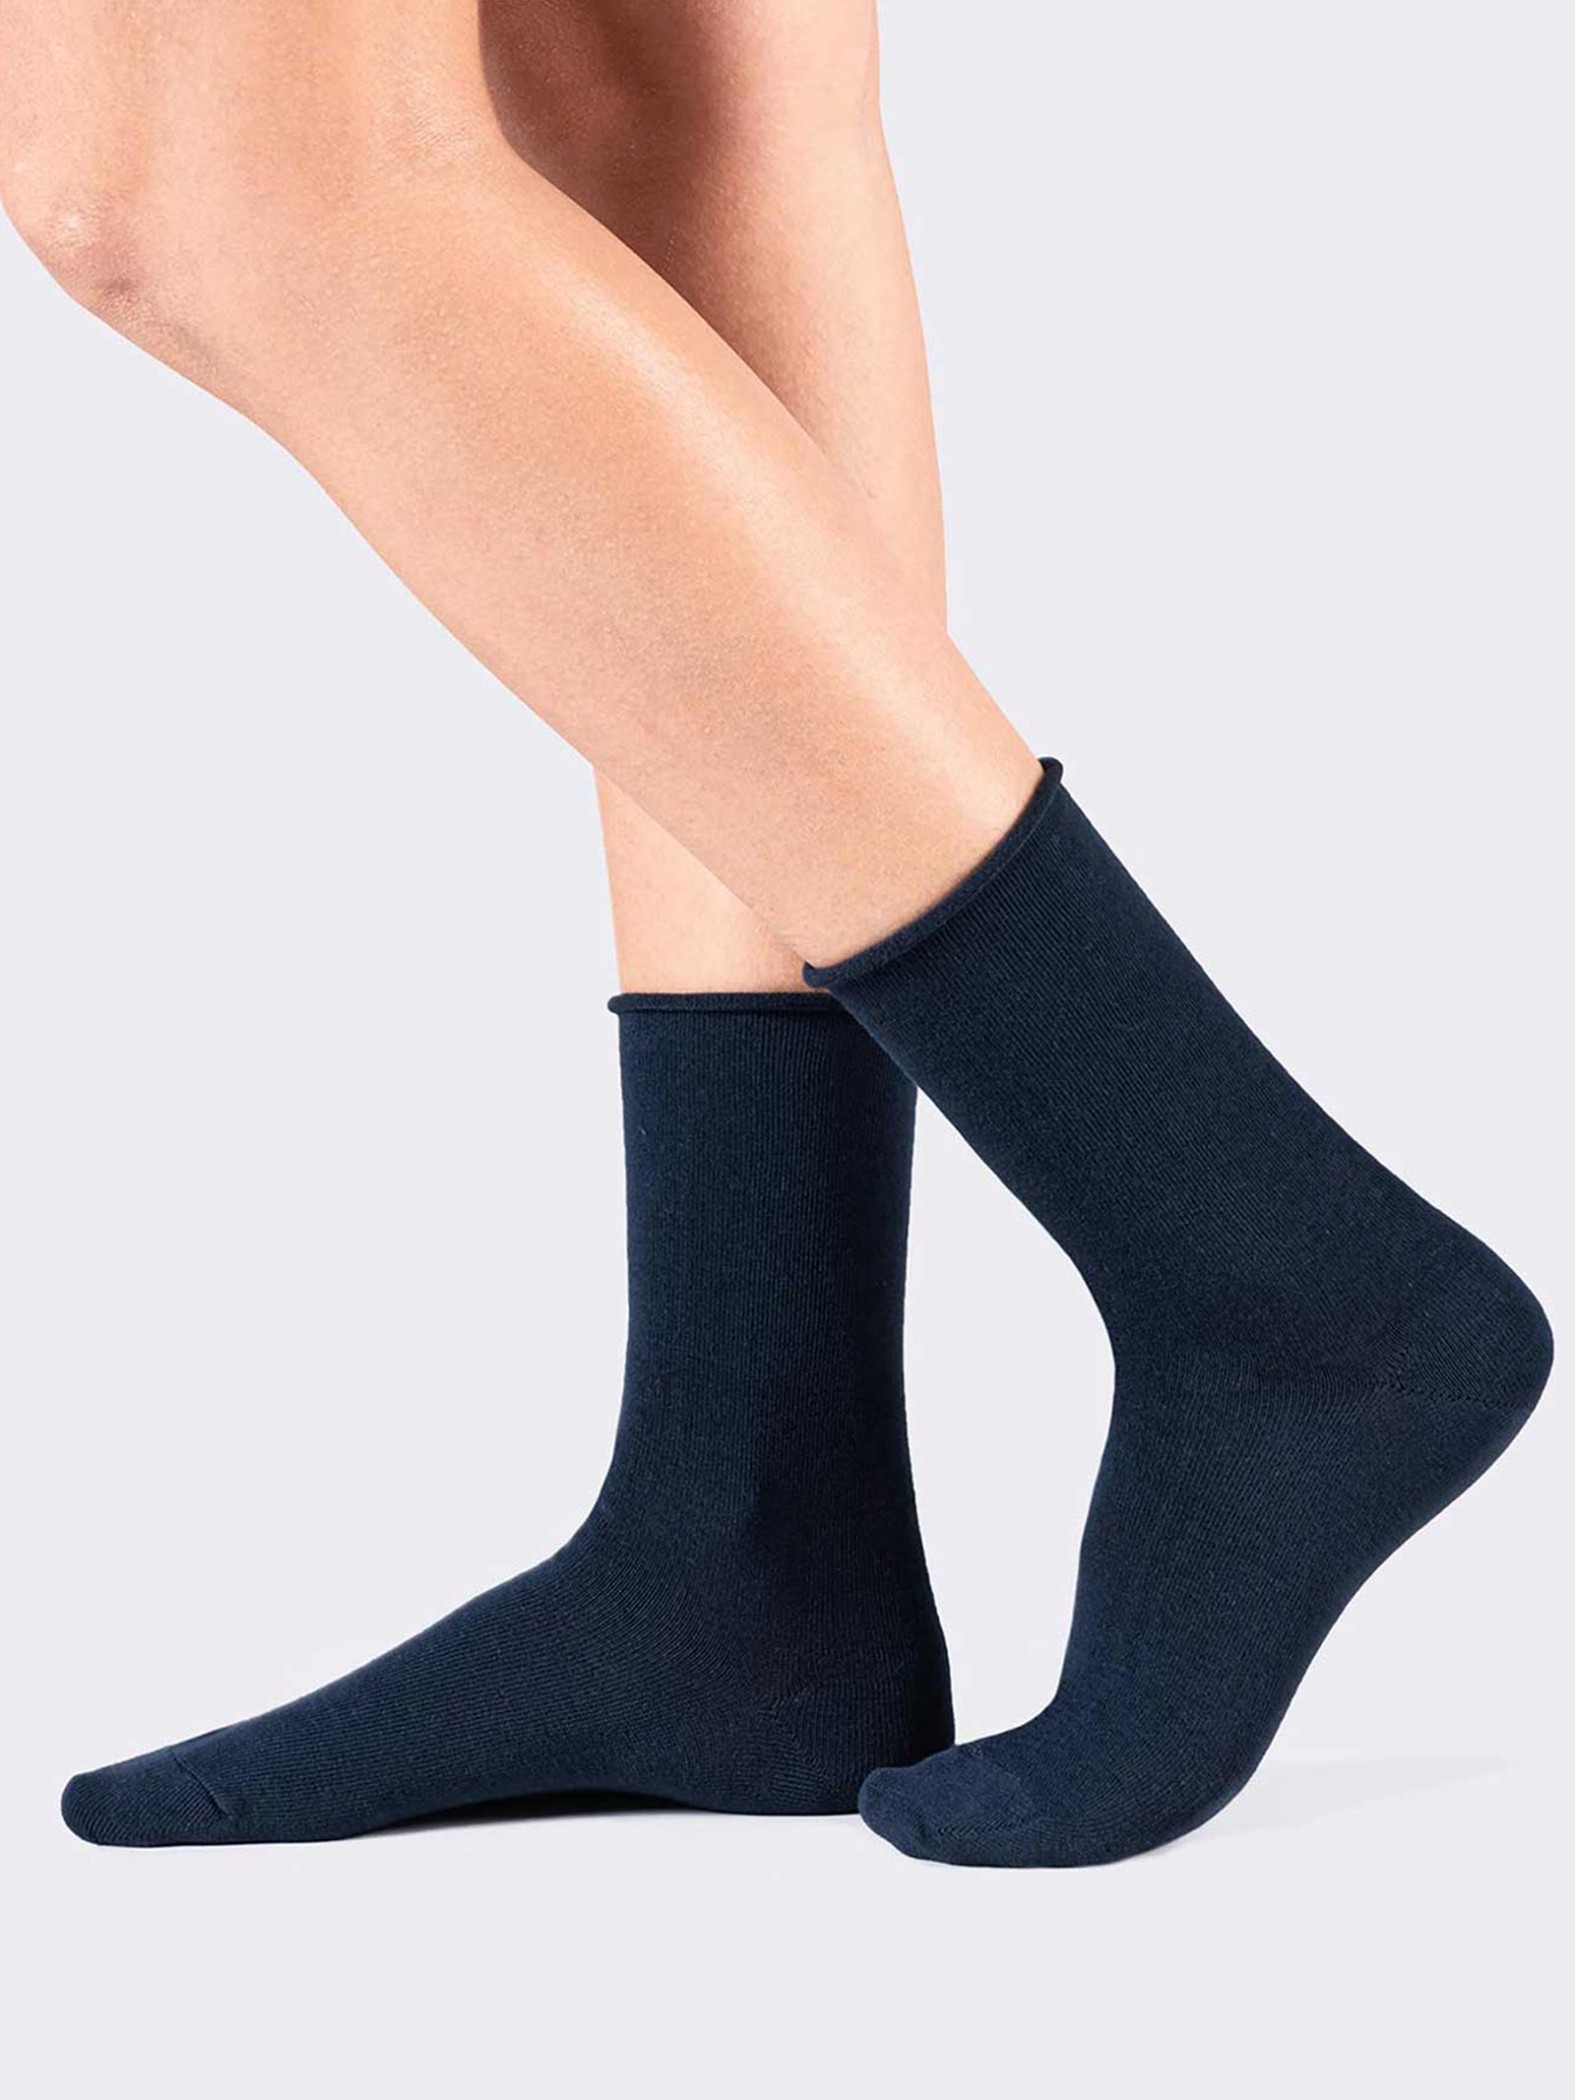 Sanitary ladies' calf socks in warm cotton, laser-cut cuff